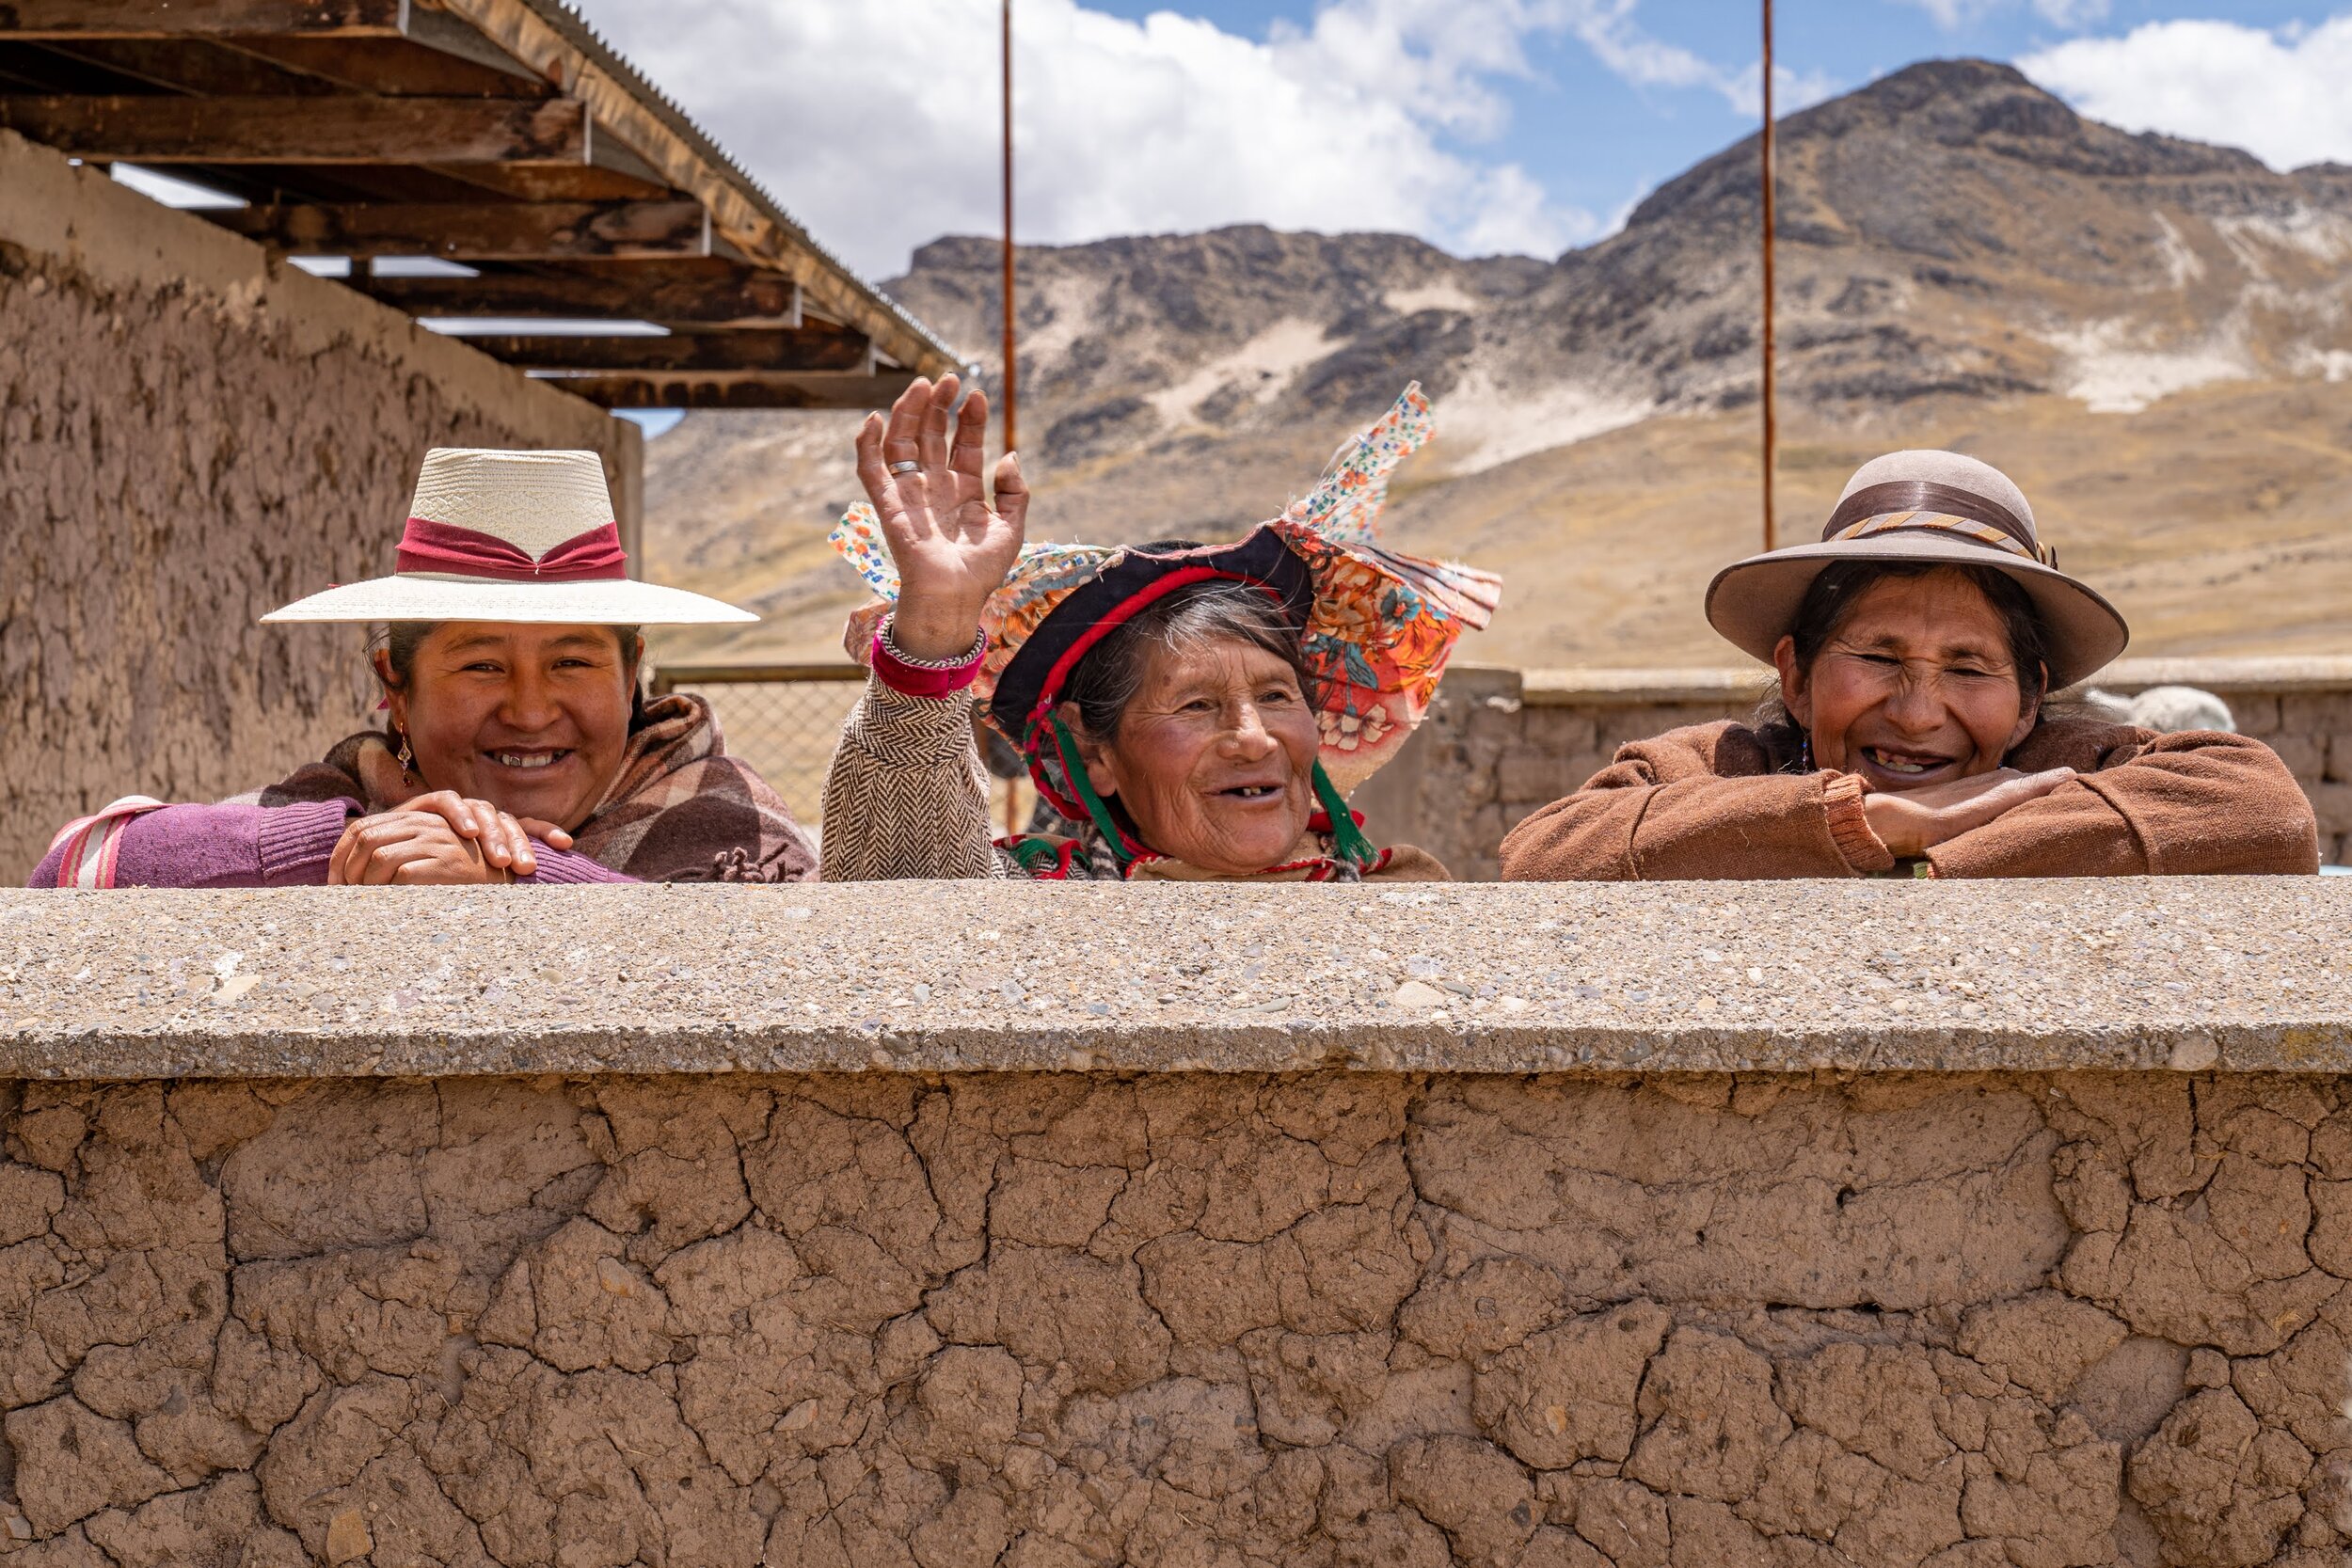 109_Wasim Muklashy Photography_Andes Mountains_Peru_Quechua Benefit_Picotani_Spar_Macusani_Alpaca.jpg